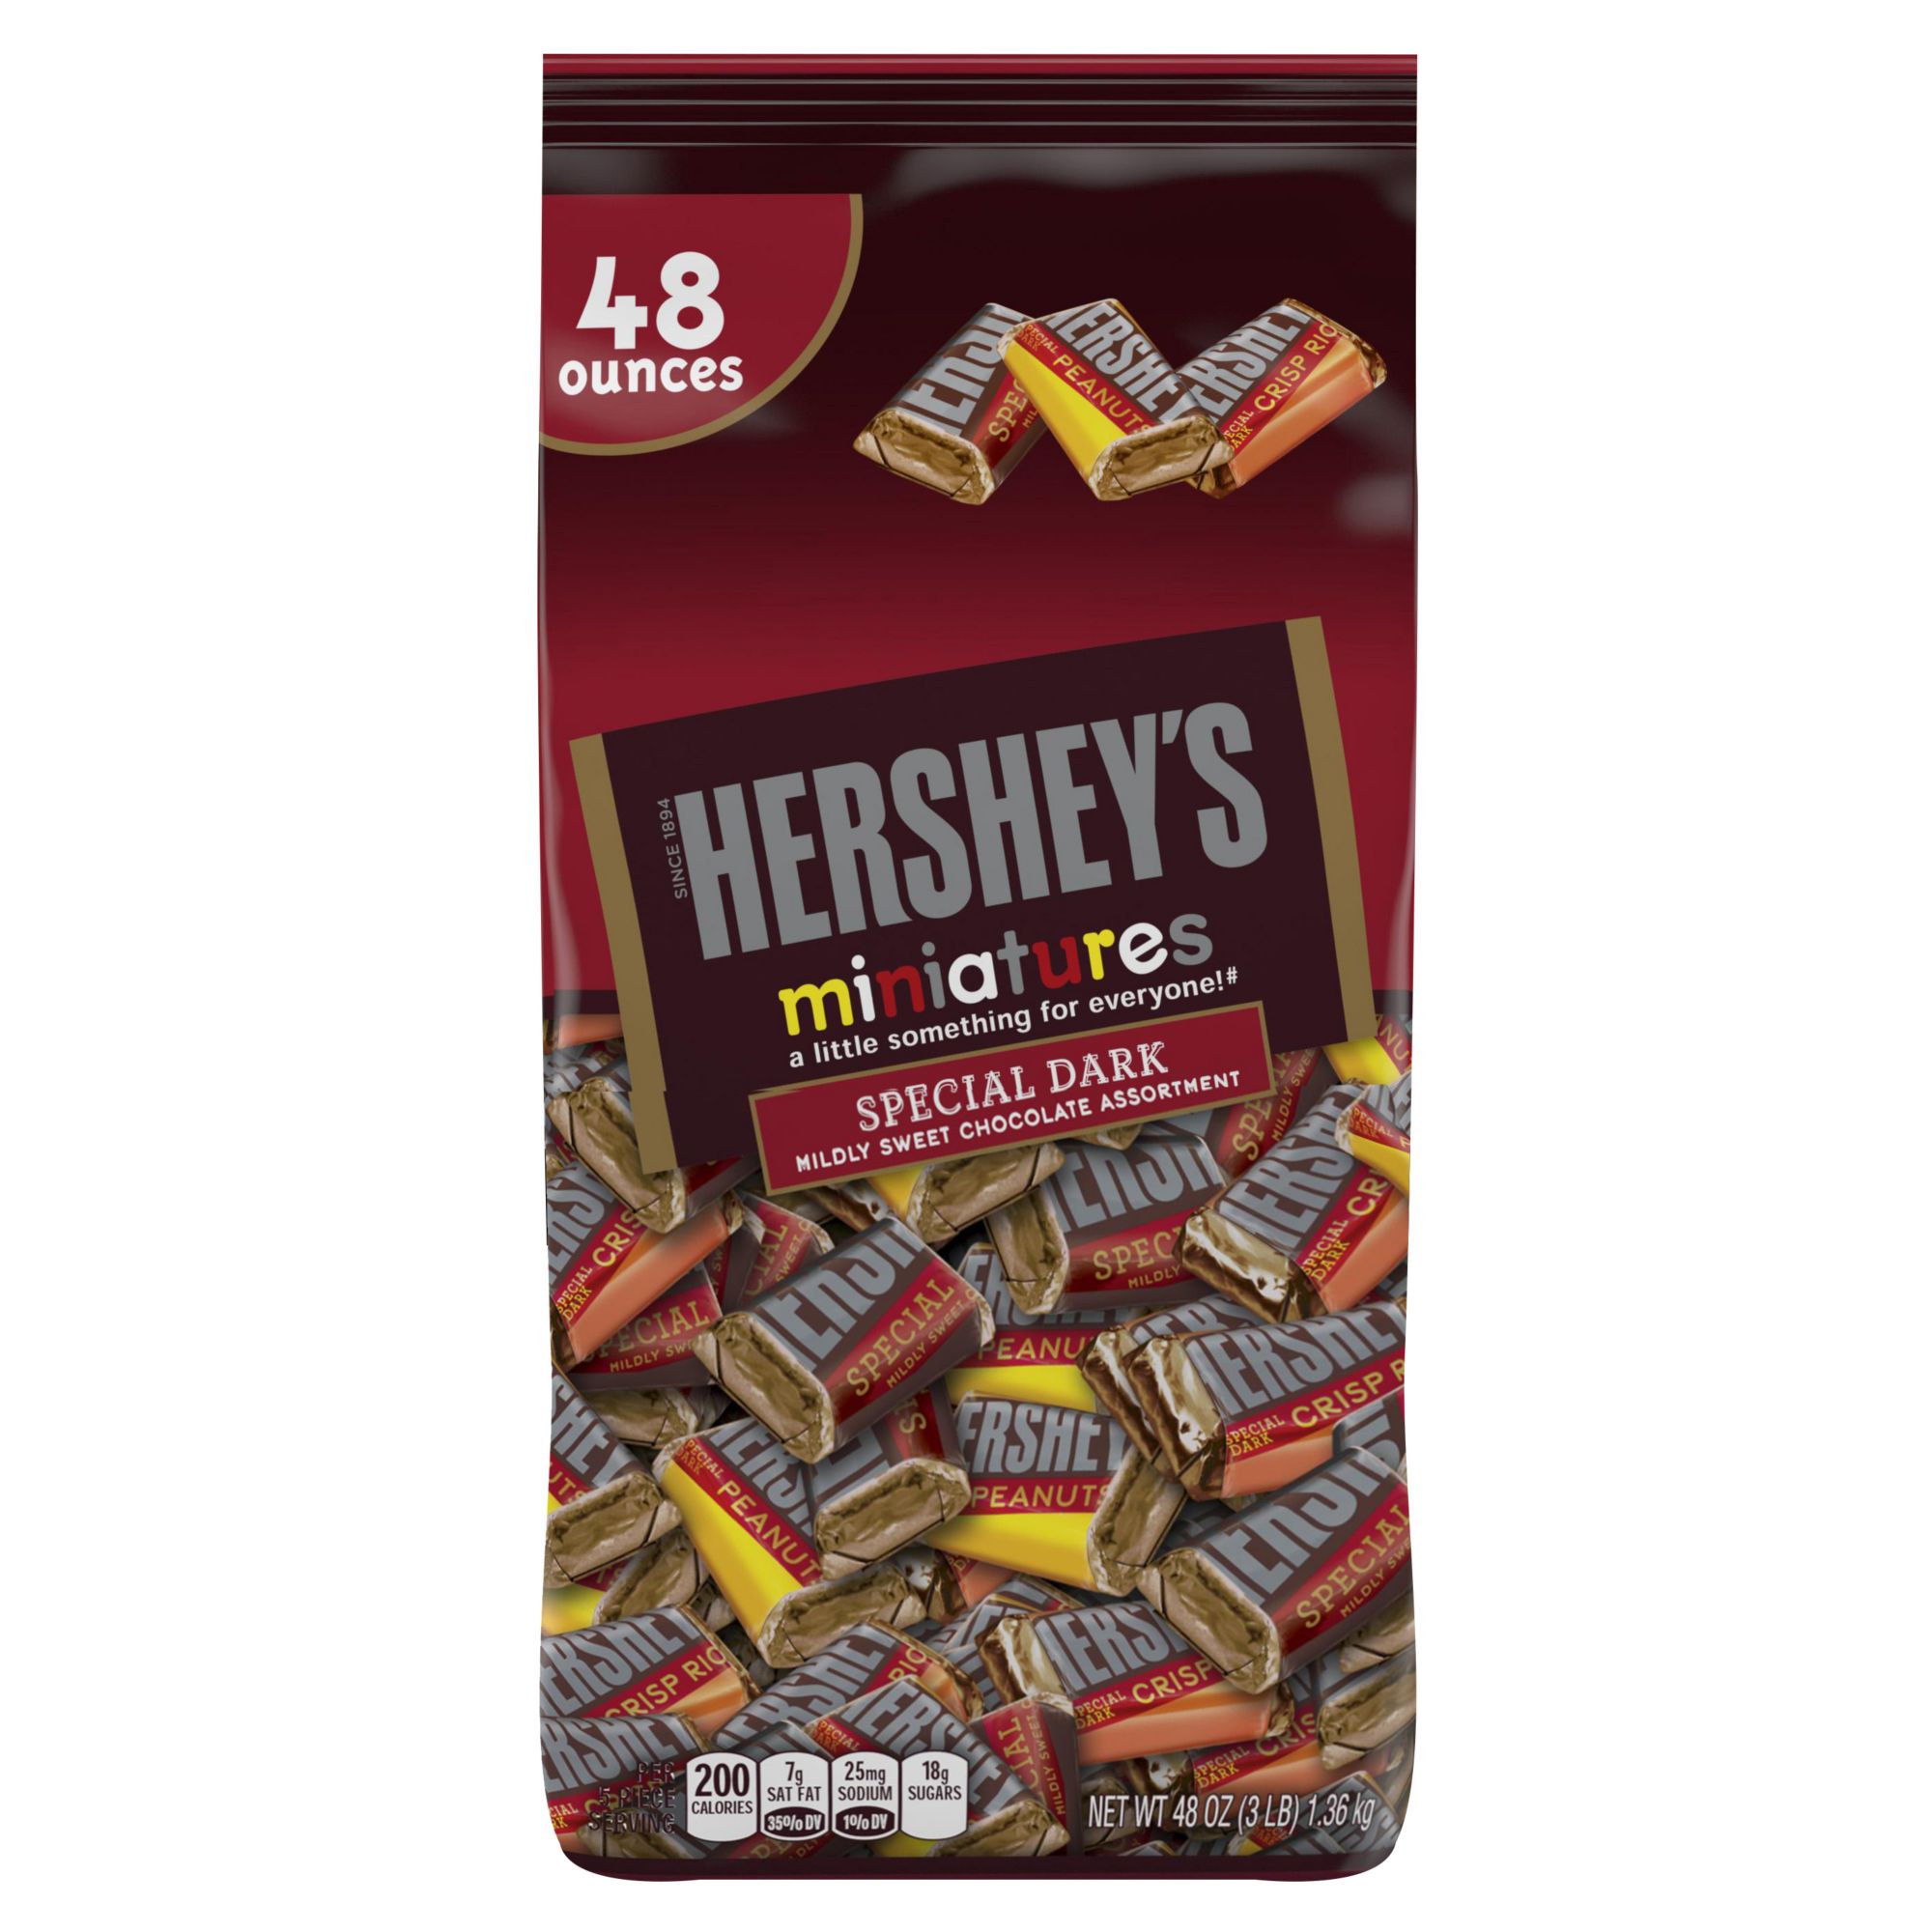 Hershey's Gold Miniatures Peanut & Pretzels Chocolate Candy Classic Bag, 10  Oz. 